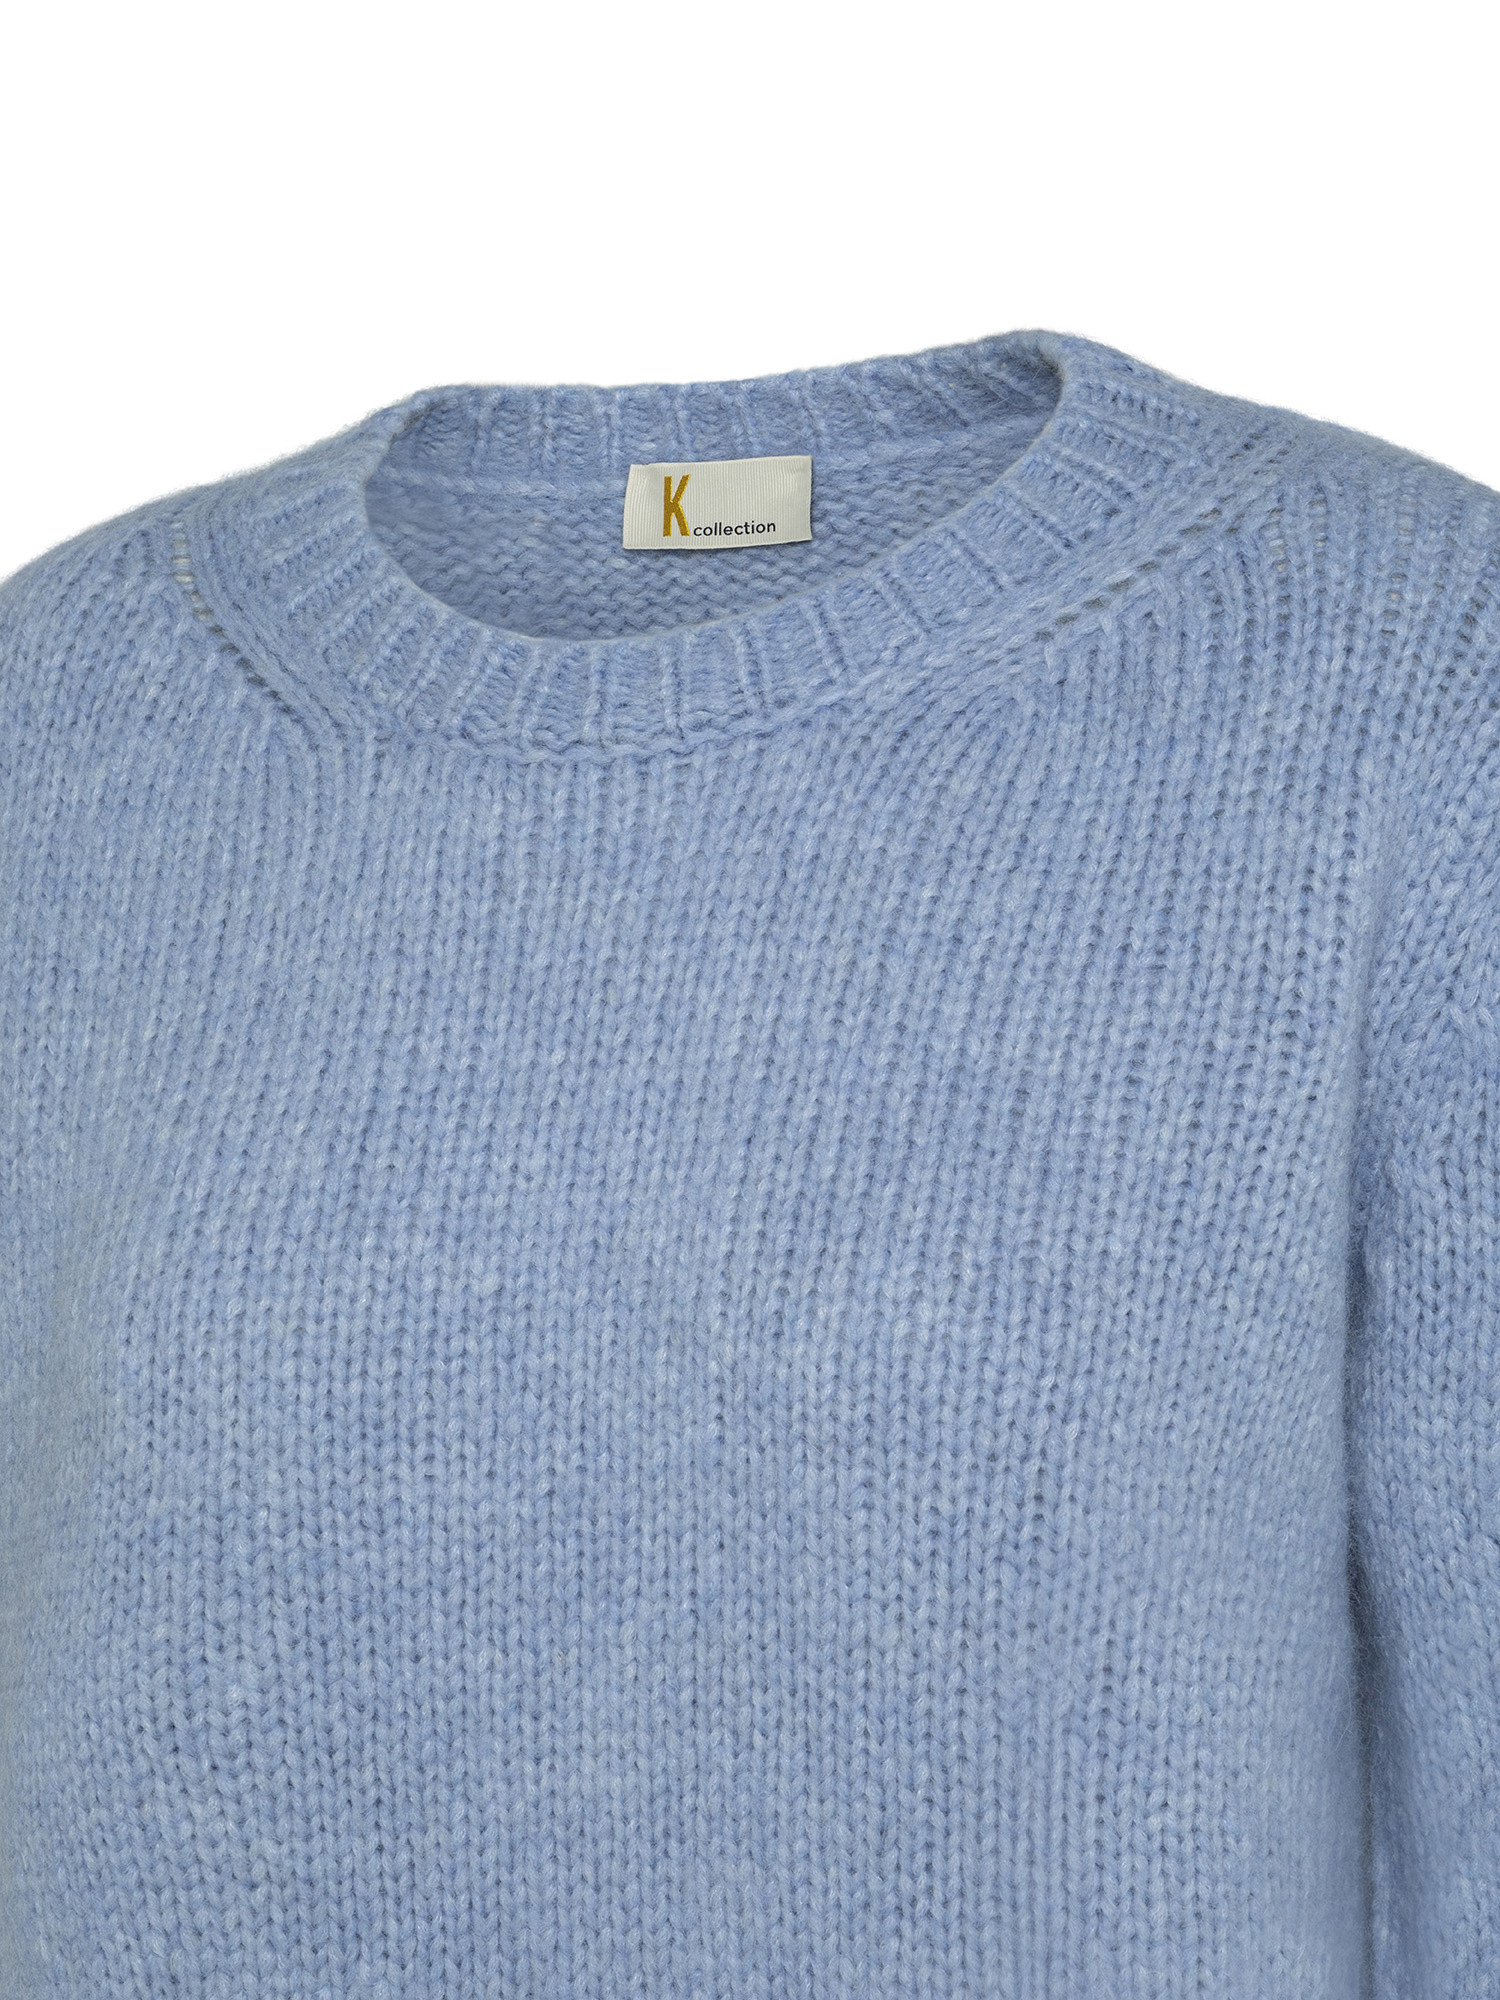 K Collection - Crewneck sweater, Light Blue, large image number 2